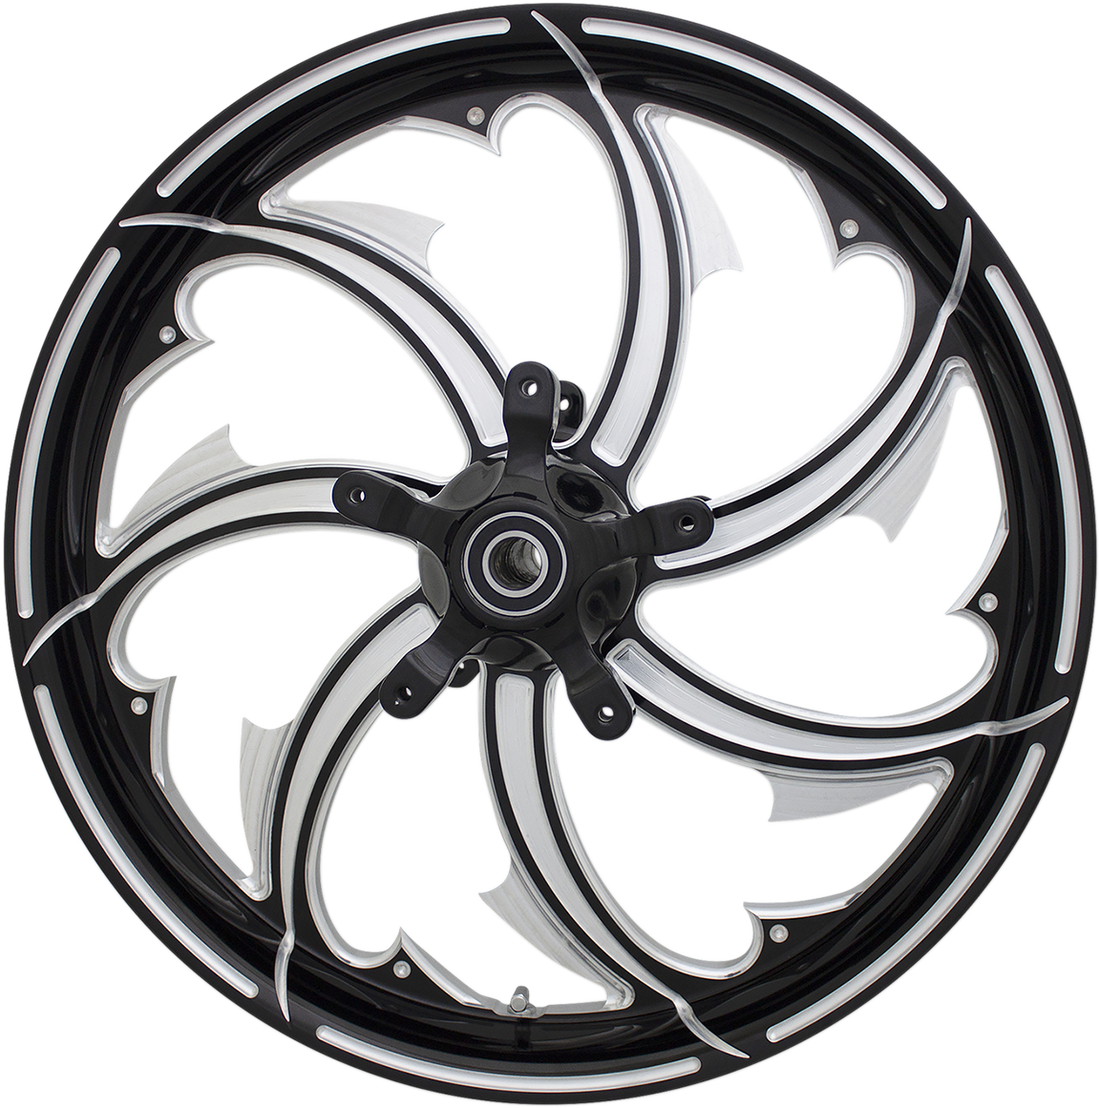 0202-2195 - COASTAL MOTO Rear Wheel - Fury - Single Disc/ABS - Black Cut - 18"x5.50" - FL FRY-185-BC-ABST